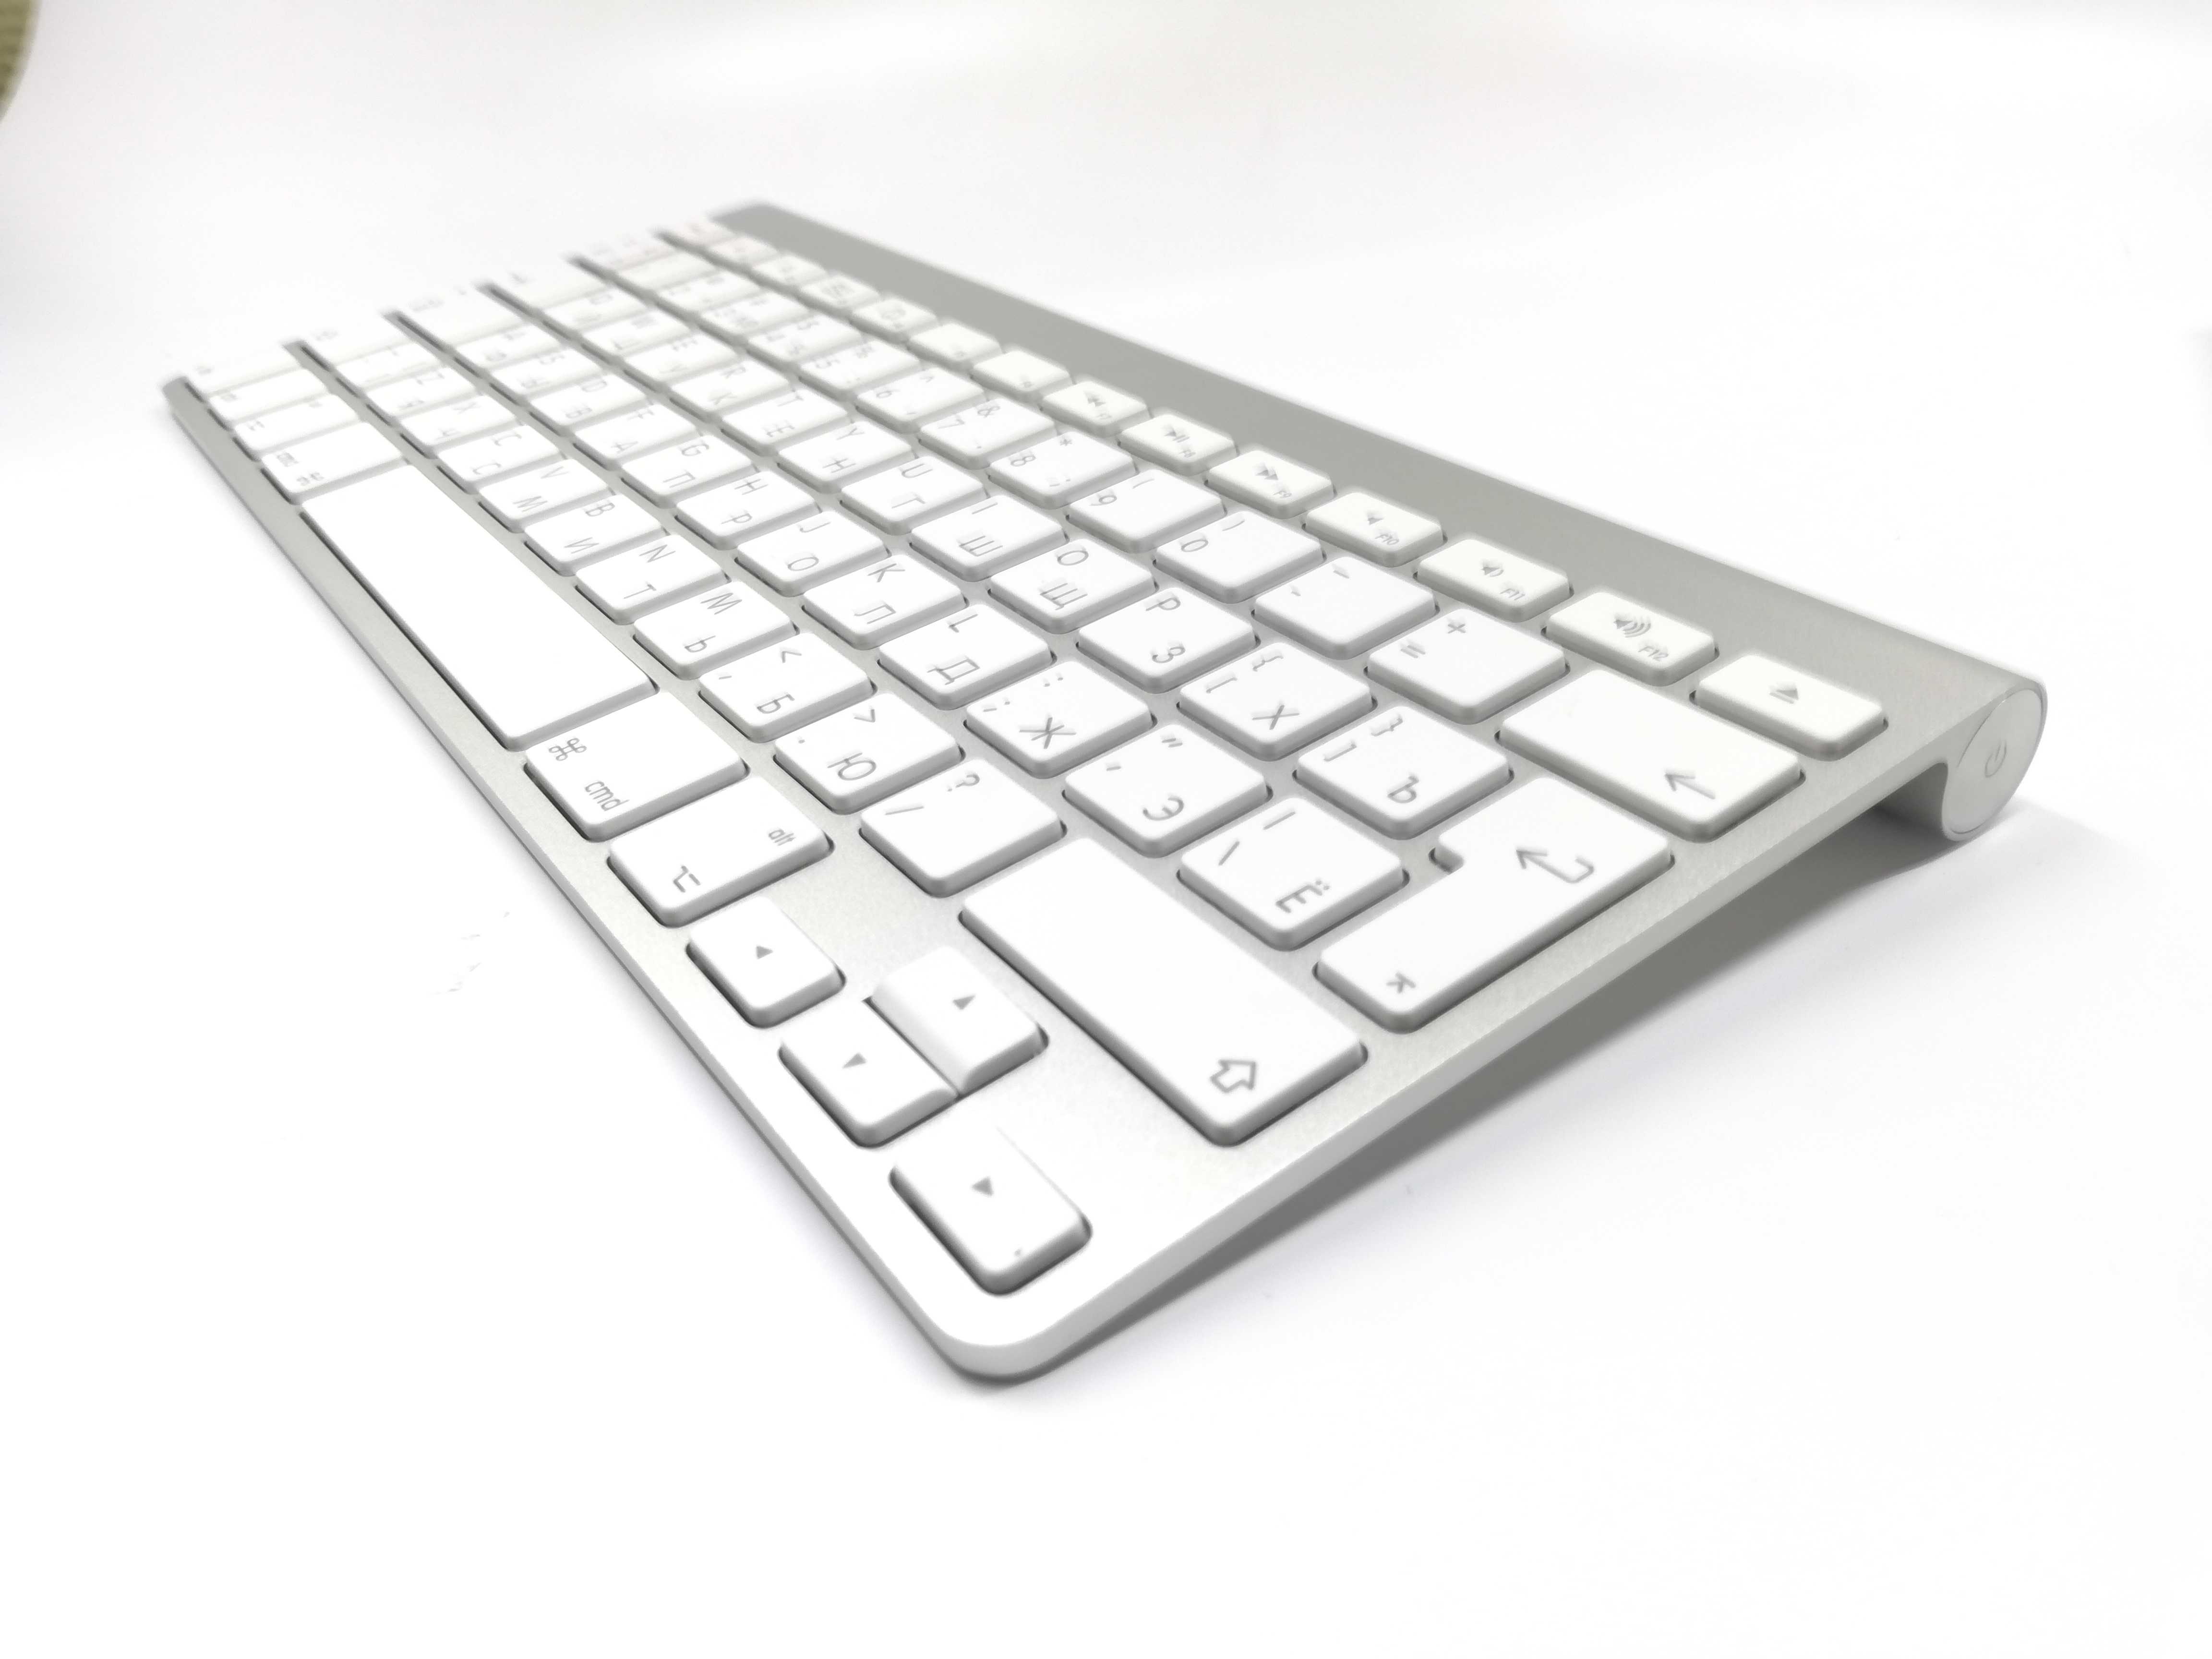 Apple wireless keyboard mc184 white bluetooth купить по акционной цене , отзывы и обзоры.